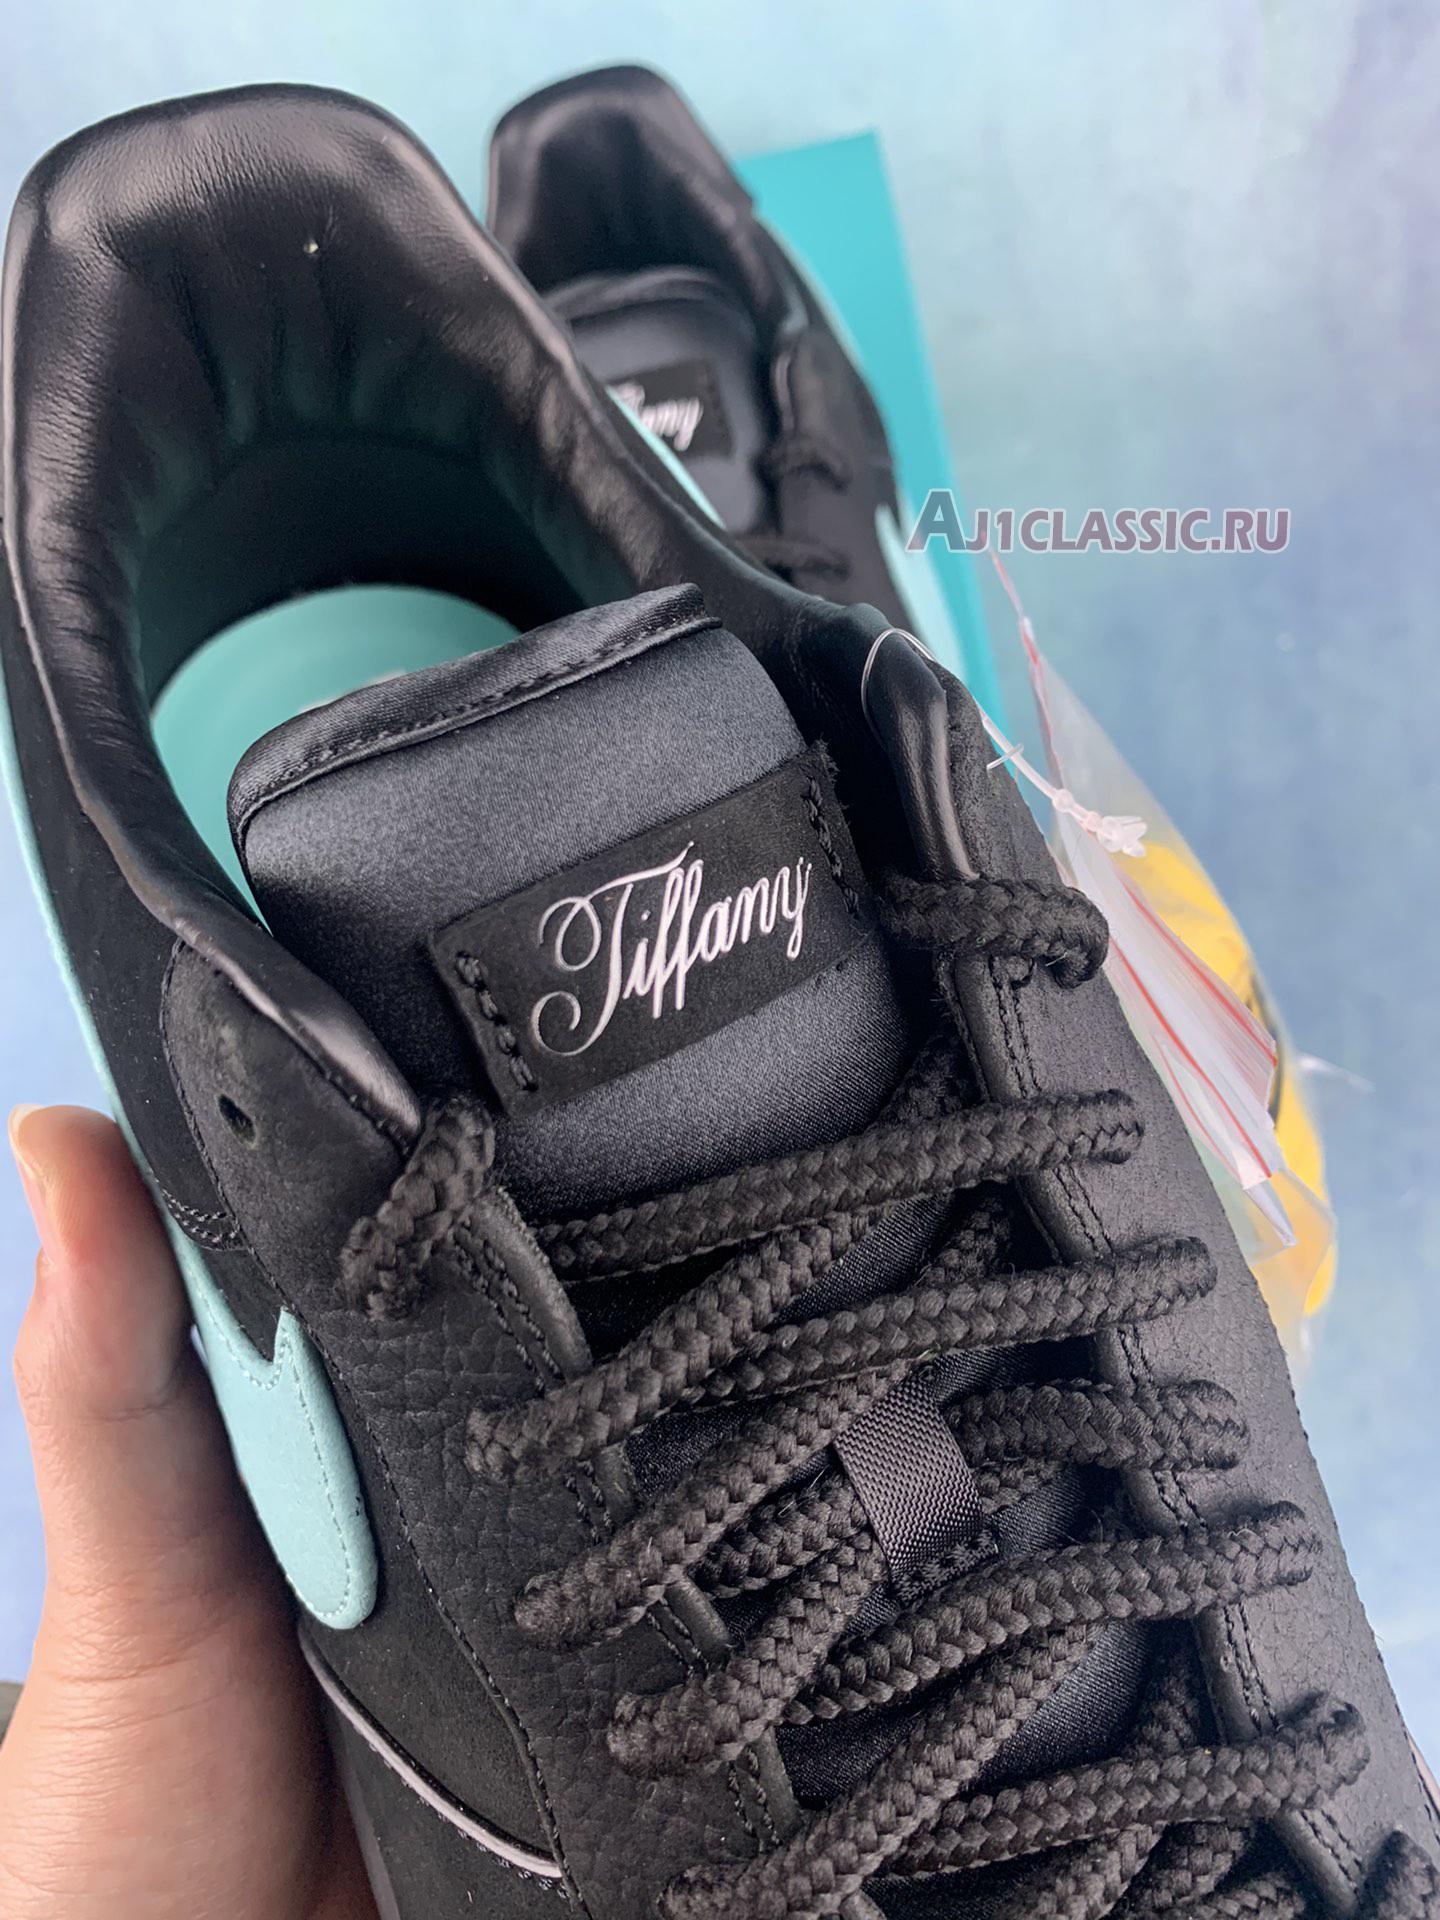 Tiffany & Co. x Nike Air Force 1 Low "1837" DZ1382-001